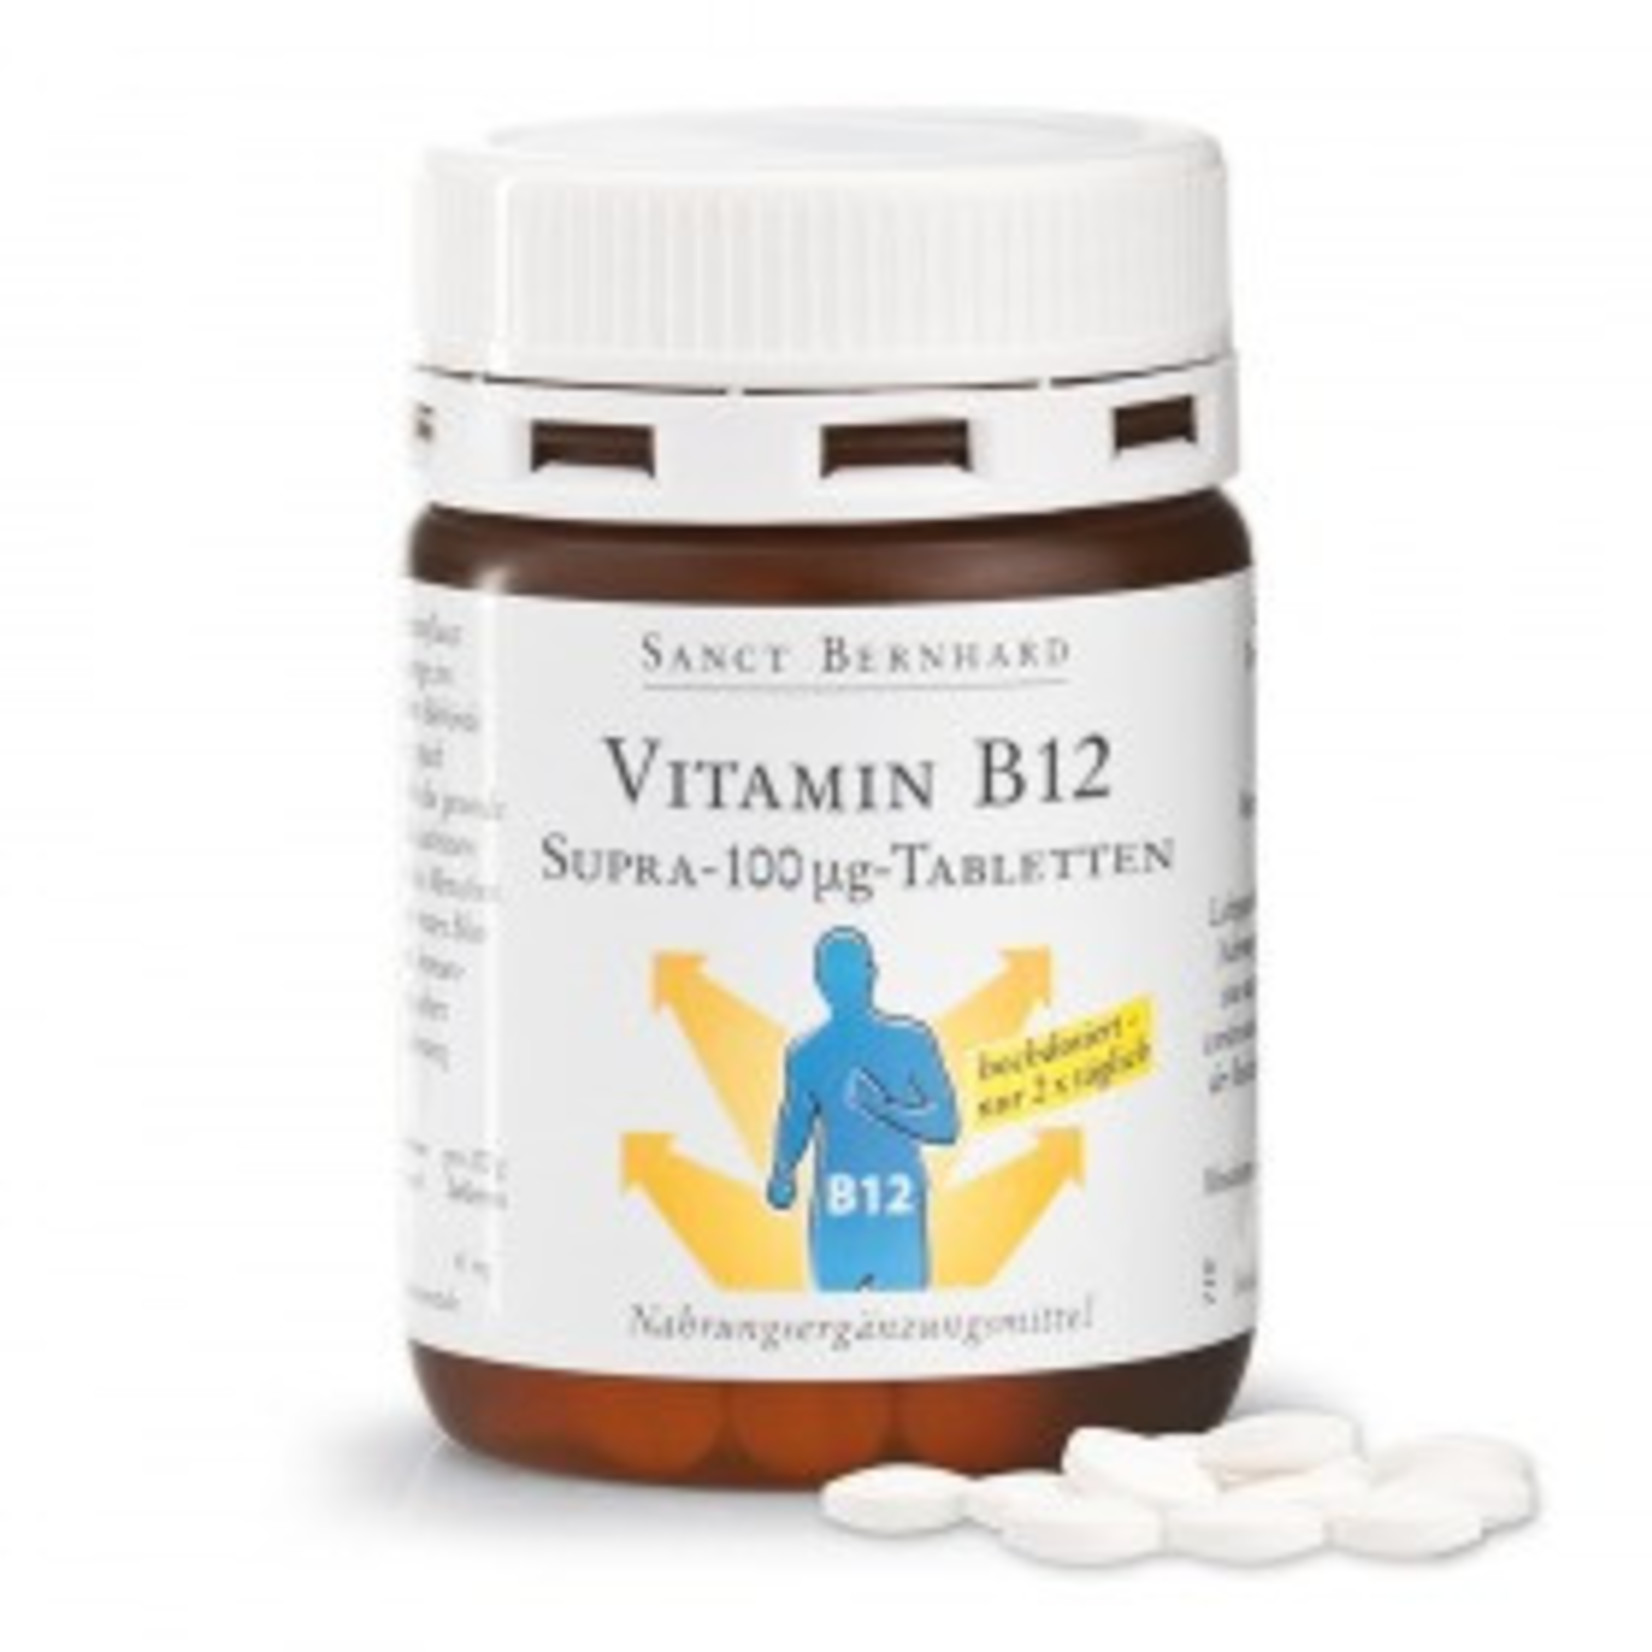 Vitamin-B12-Supra-100 µg-Tabletten